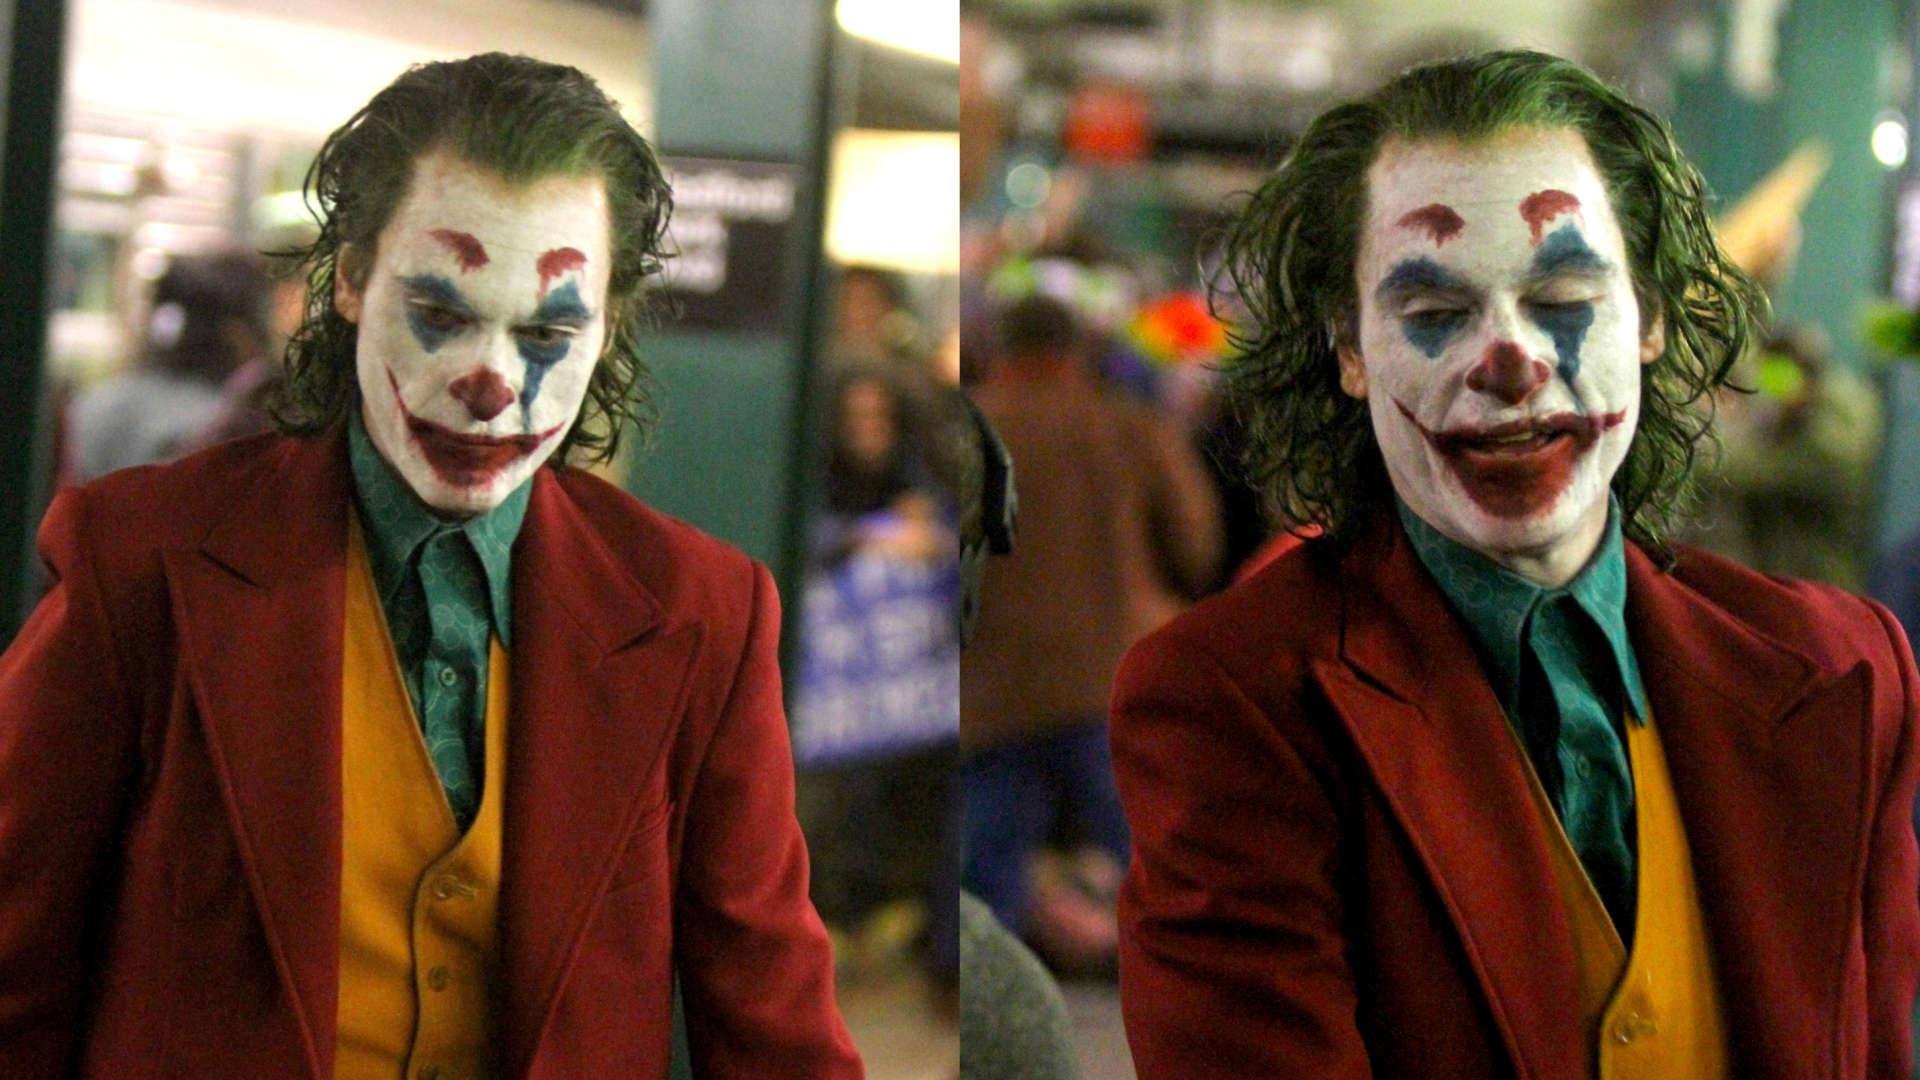 Joaquin Phoenix terrorizes NYC subway as the 'Joker'